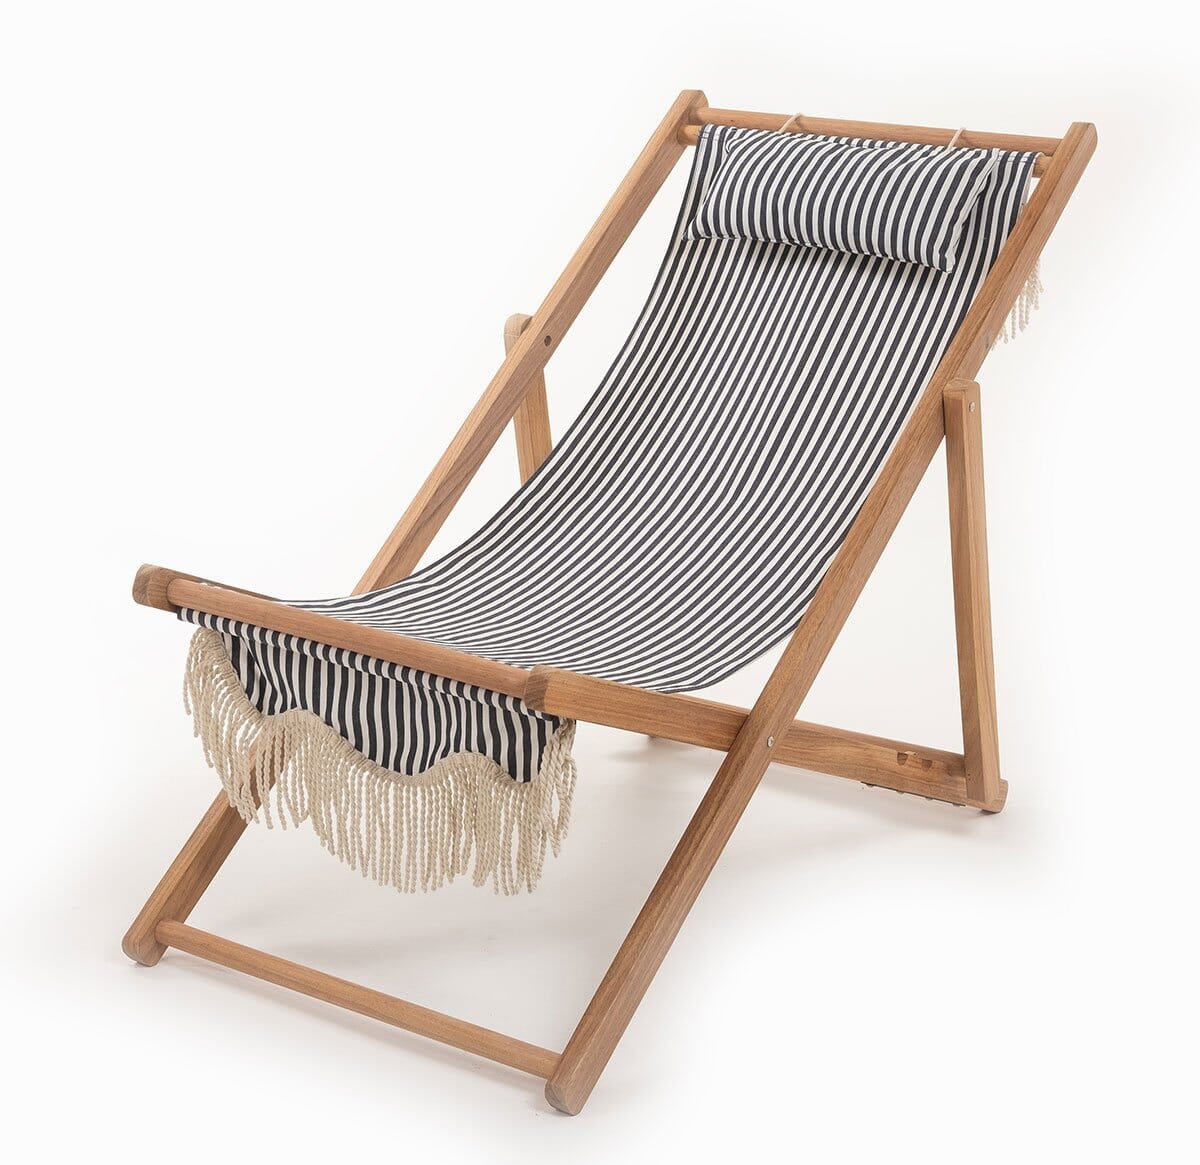 The Sling Chair - Lauren's Navy Stripe Sling Chair Business & Pleasure Co 